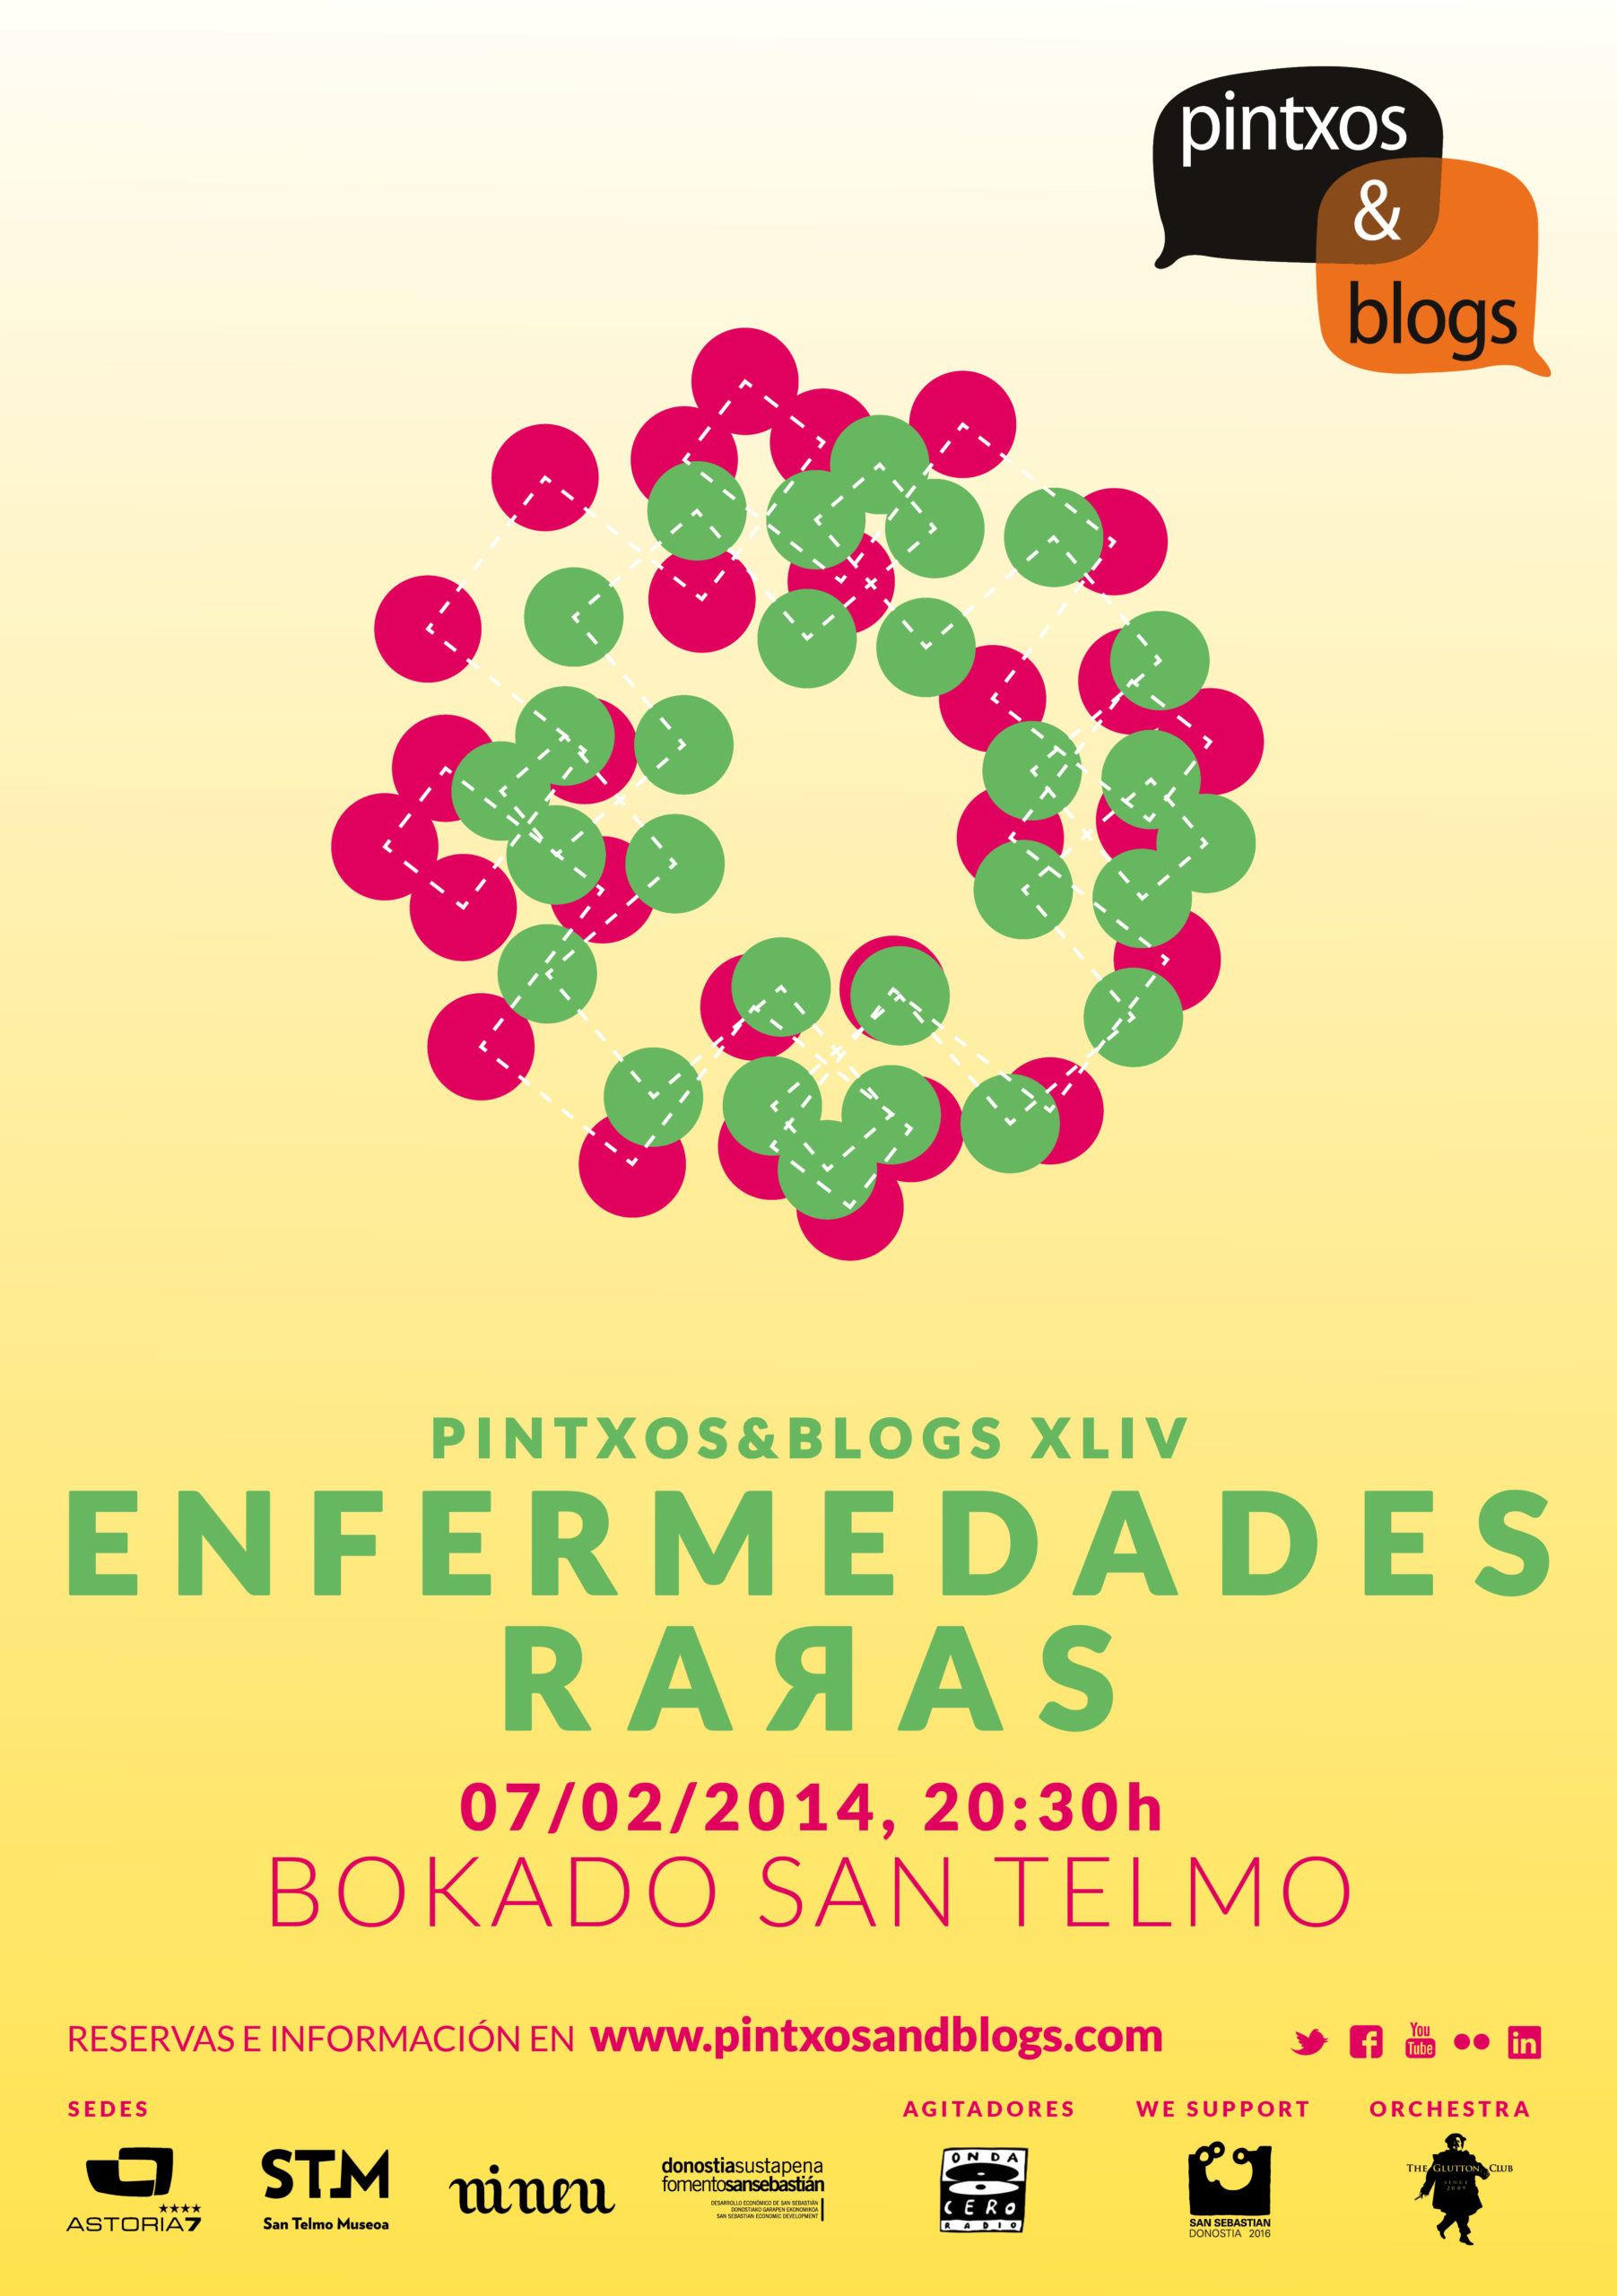 Pintxos&Blogs XLIV. Enfermedades raras. 2014.02.07, Bokado San Telmo